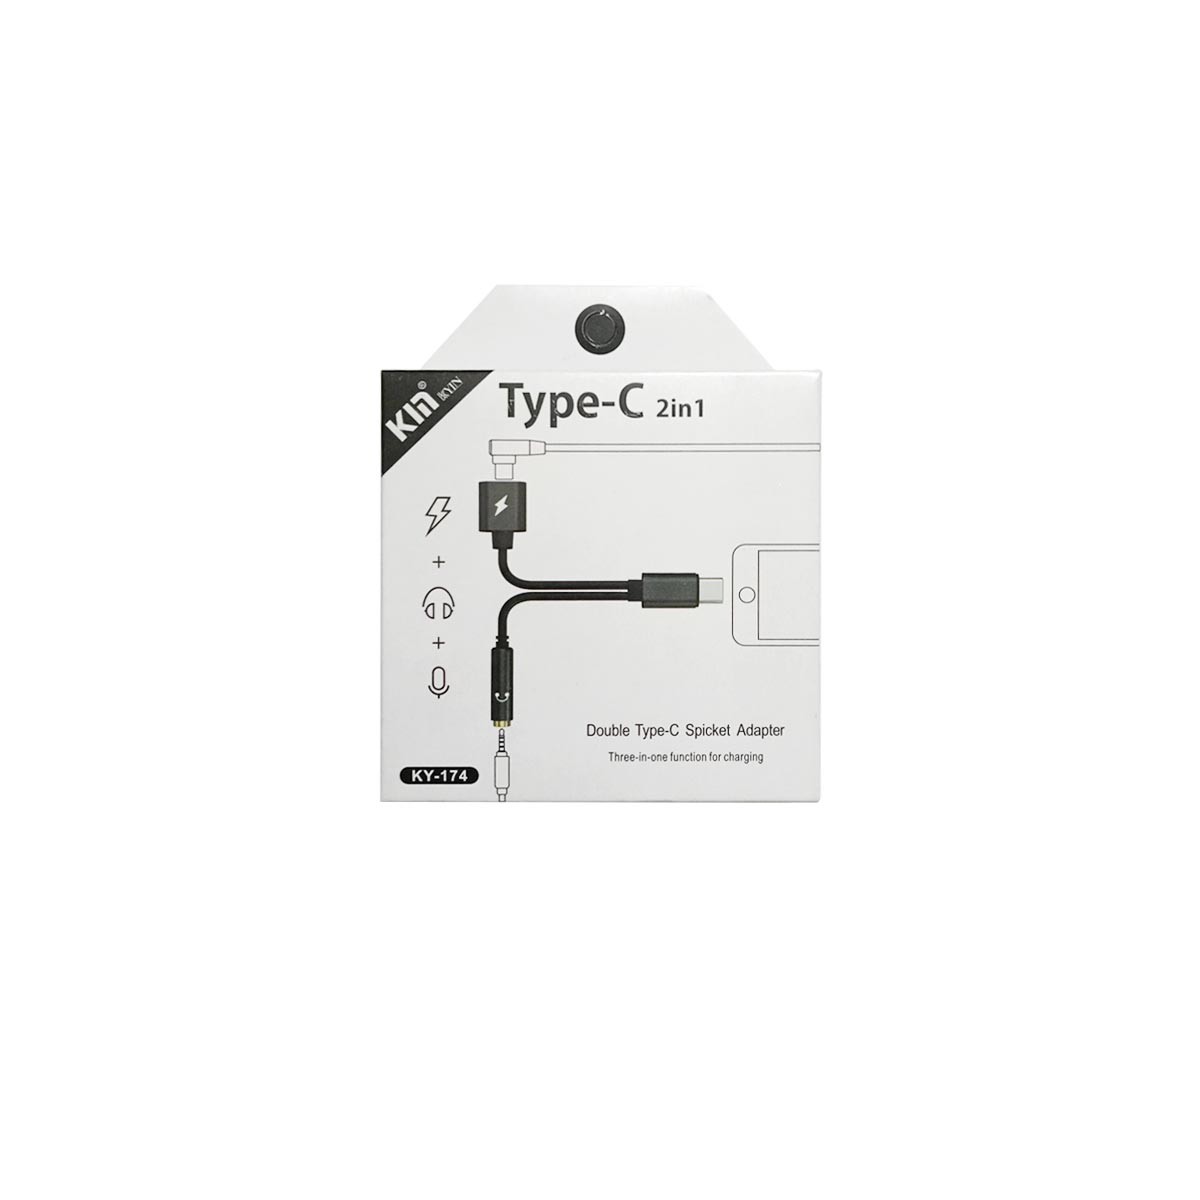 Double Type-C Spicket Adapter